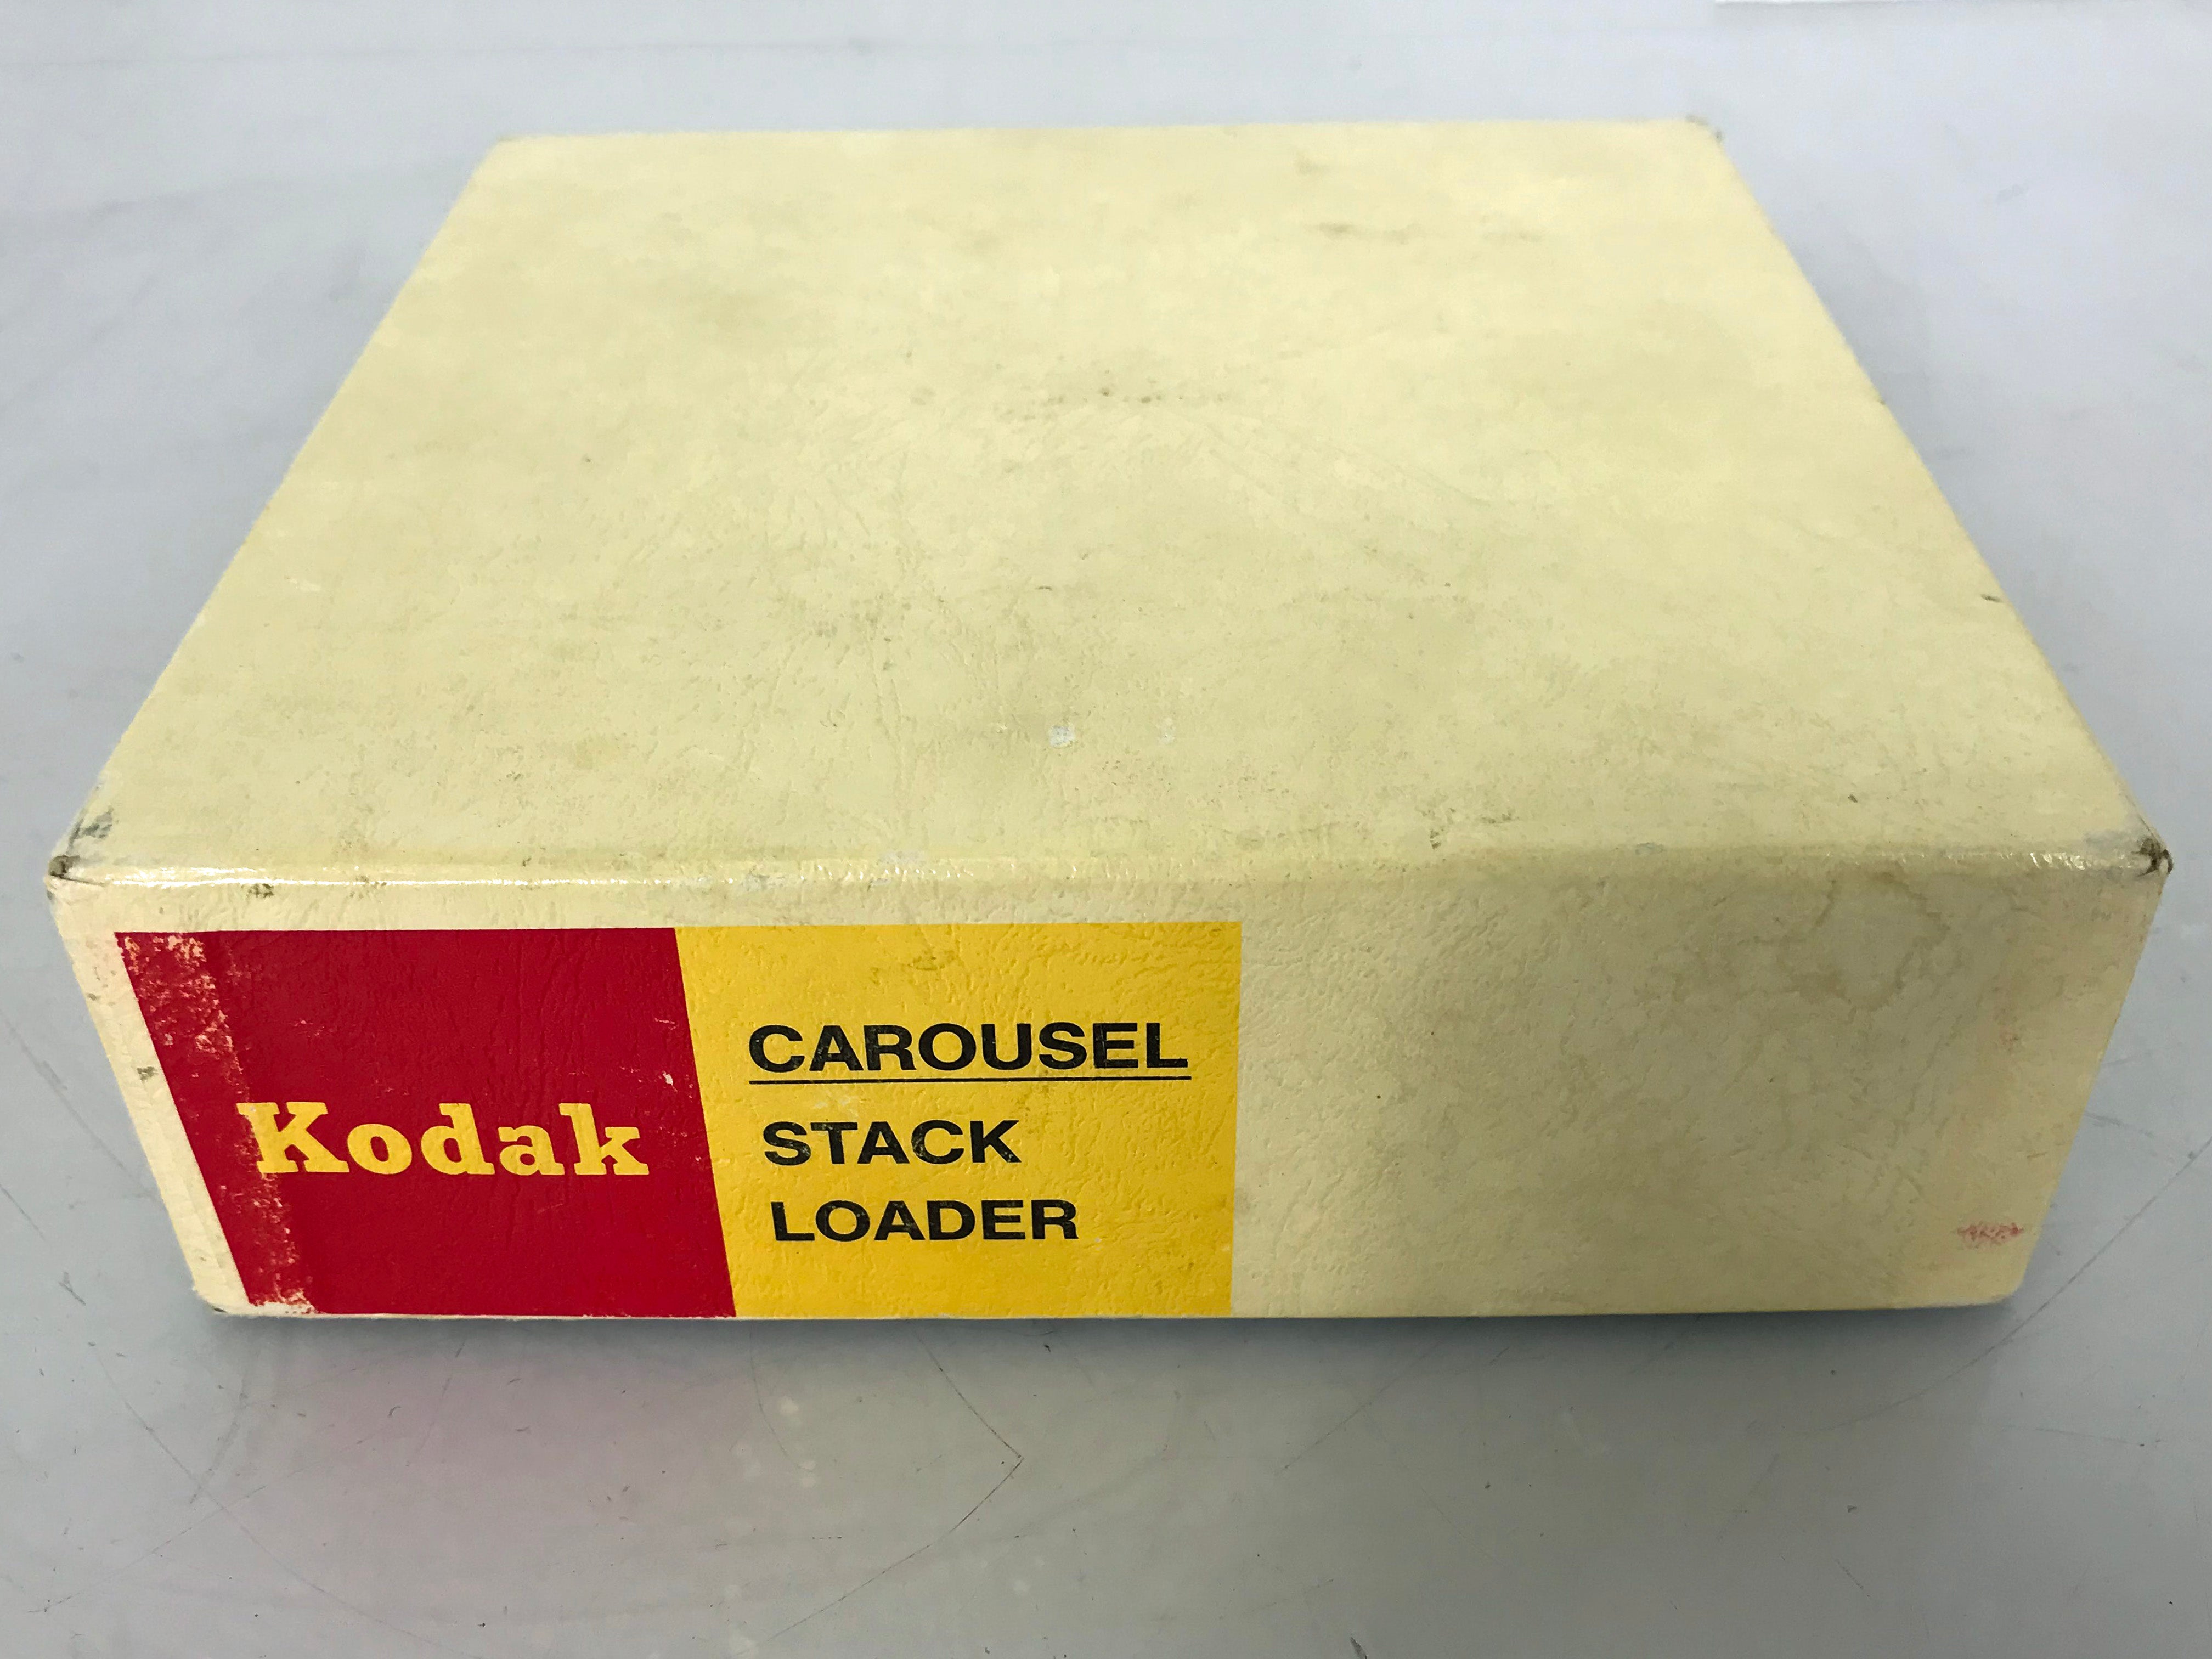 Kodak Carousel Stack Loader